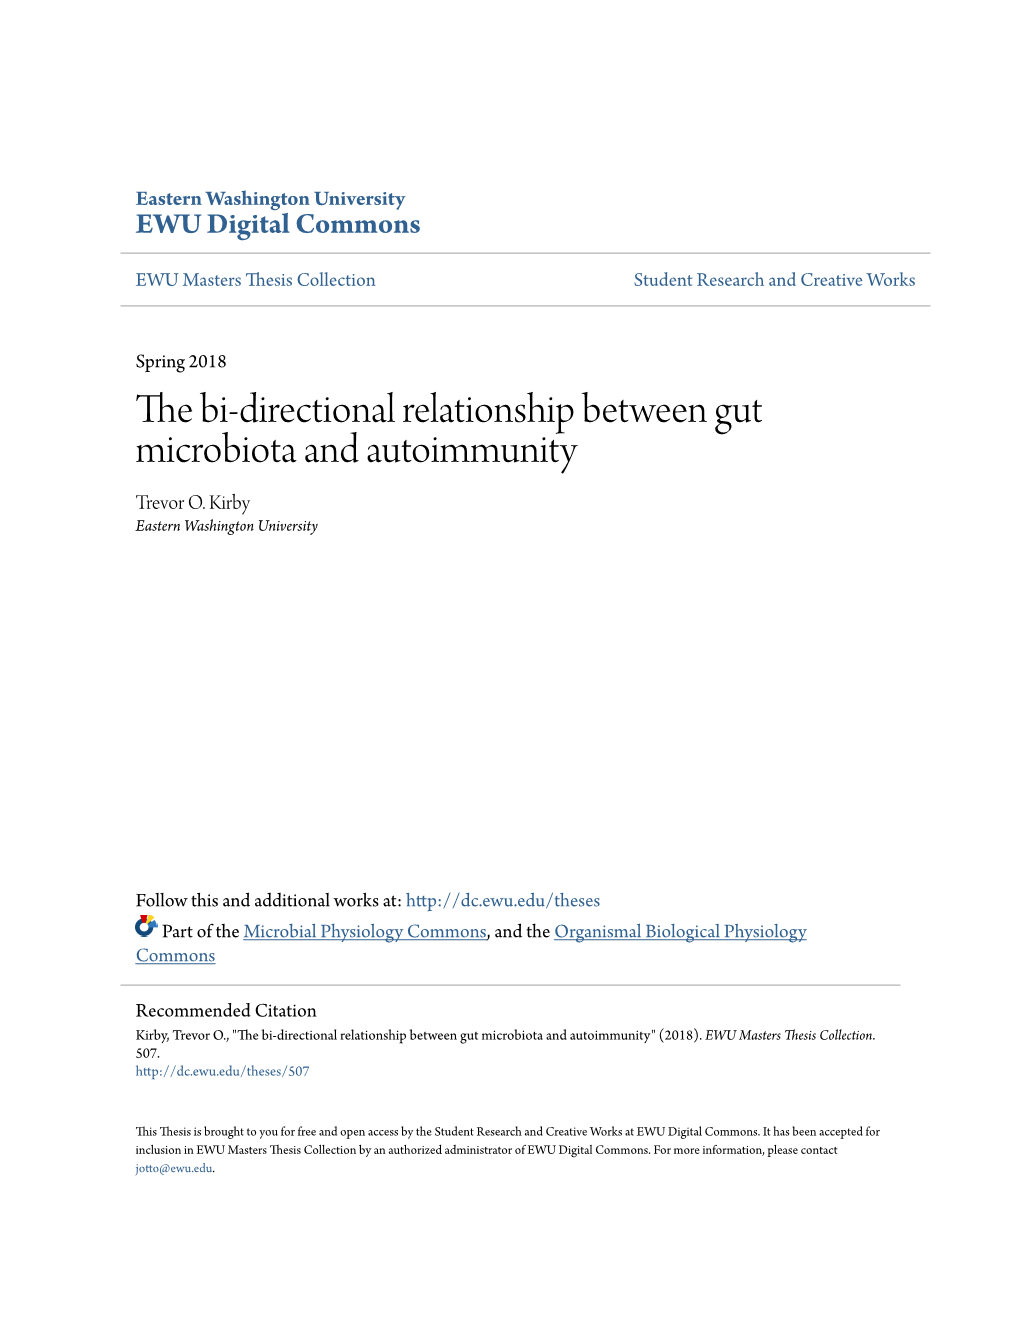 The Bi-Directional Relationship Between Gut Microbiota and Autoimmunity Trevor O